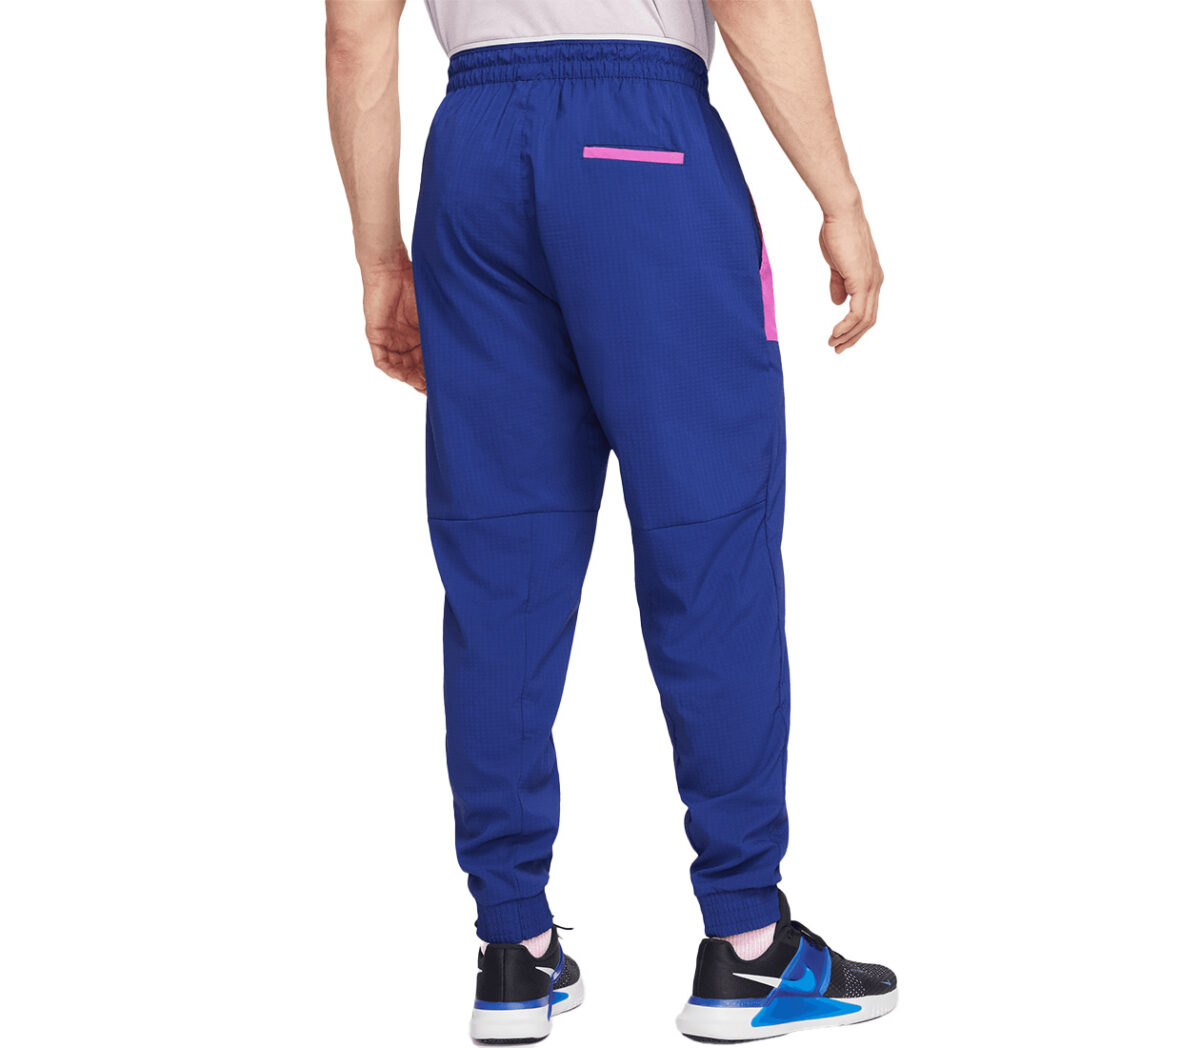 Retro Pantalone Nike Dri-fit Sport Clash uomo blu rosa